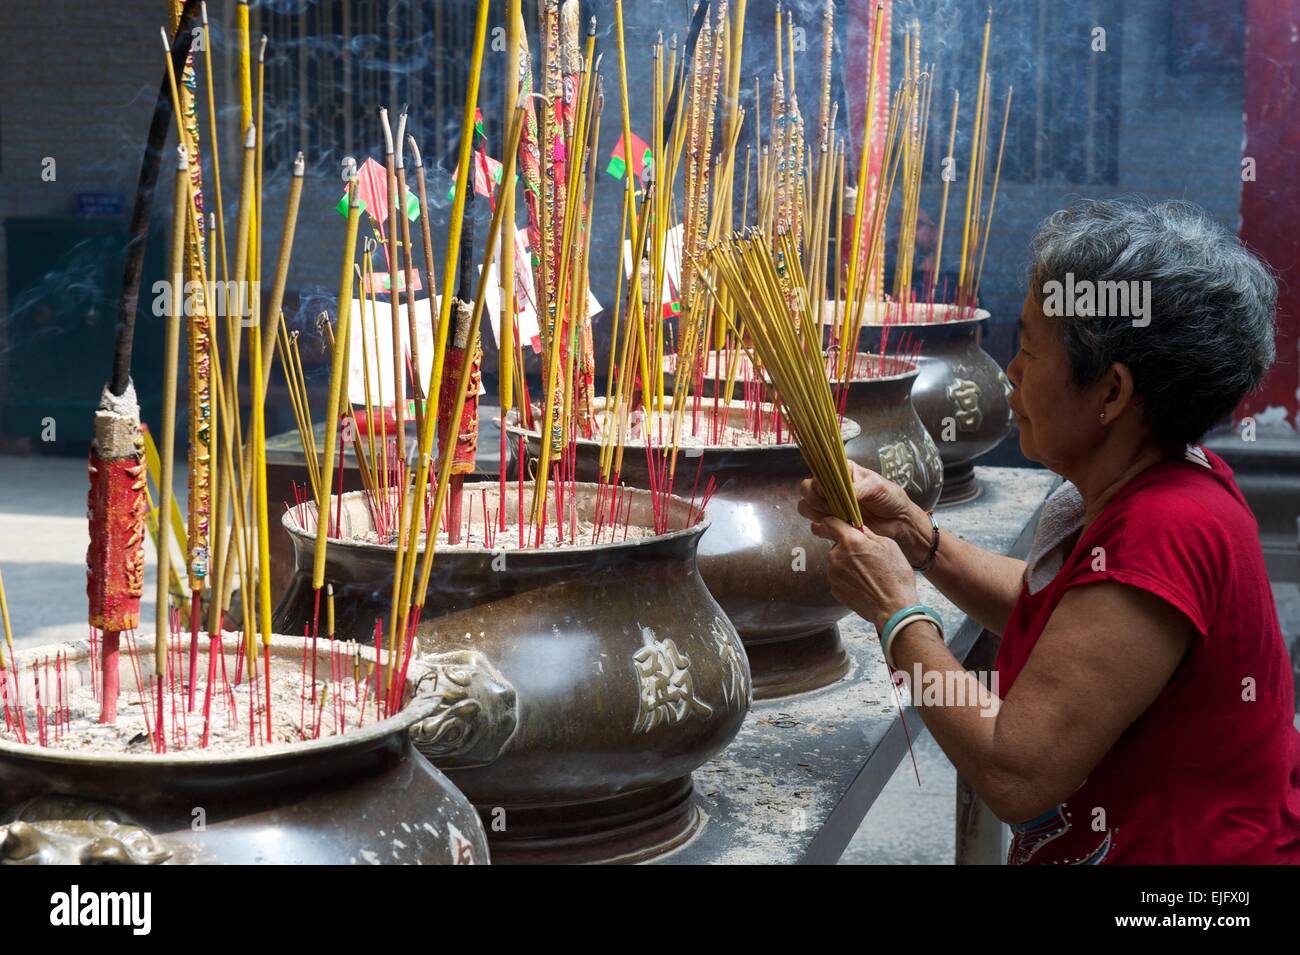 Woman lighting incense sticks, Chinese Temple, Ho Chi Minh City, Vietnam Stock Photo